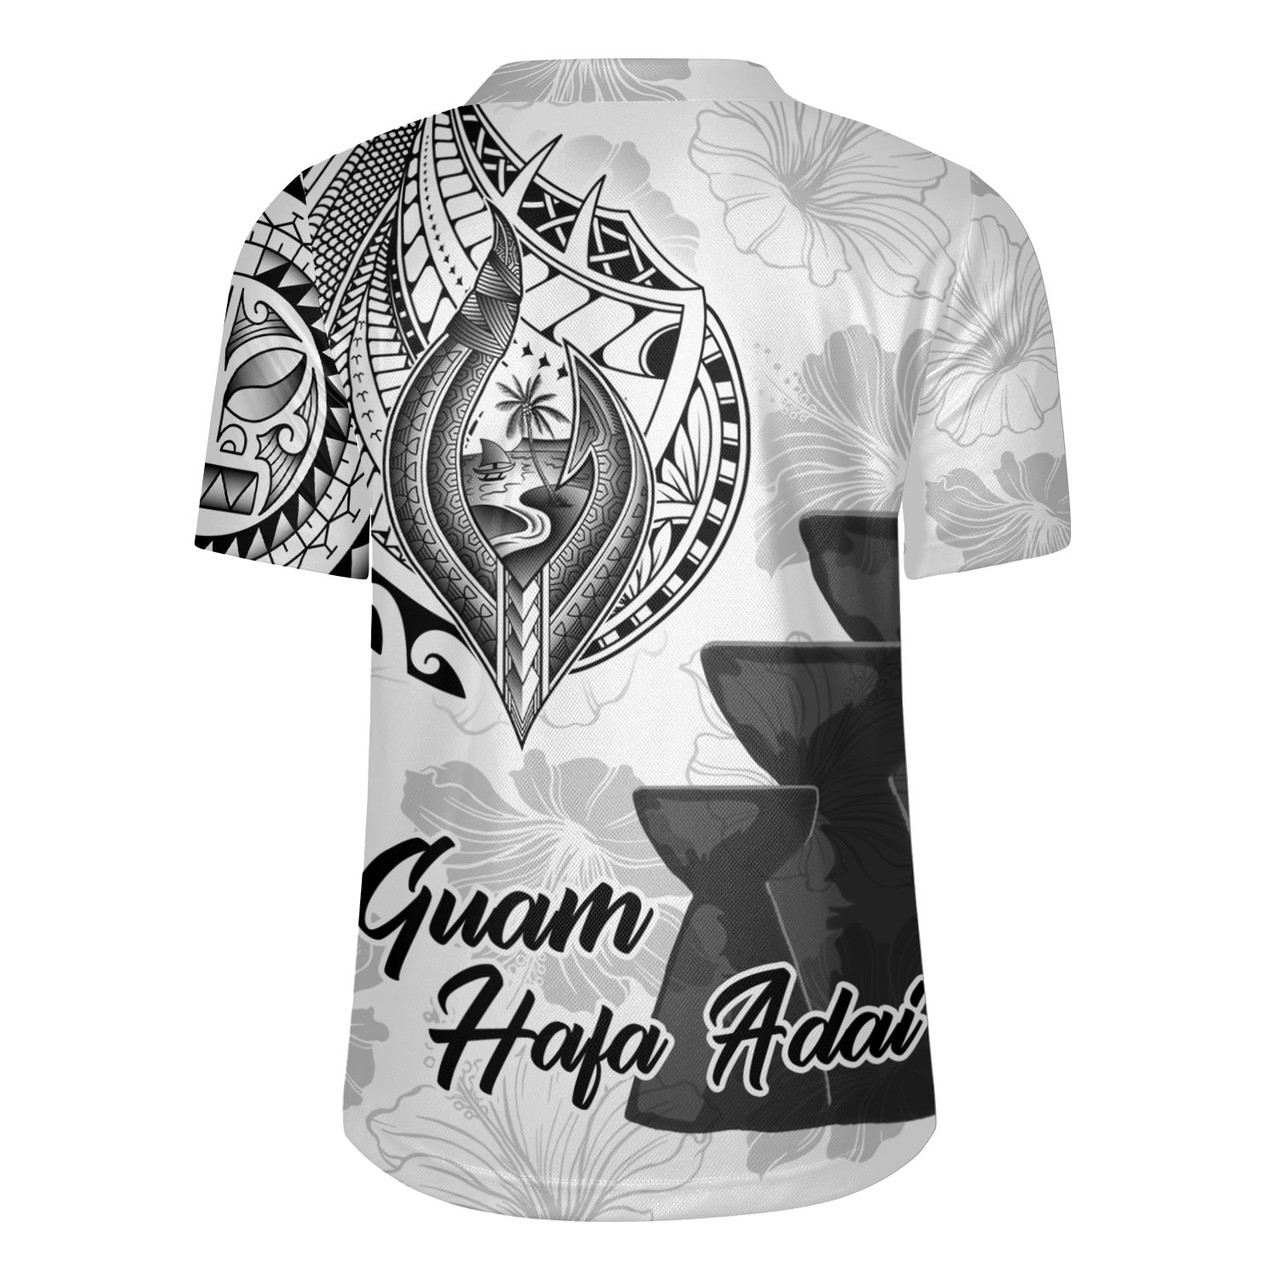 Guam Rugby Jersey Hafa Adai Guam Seal Half Sleeve Tattoo